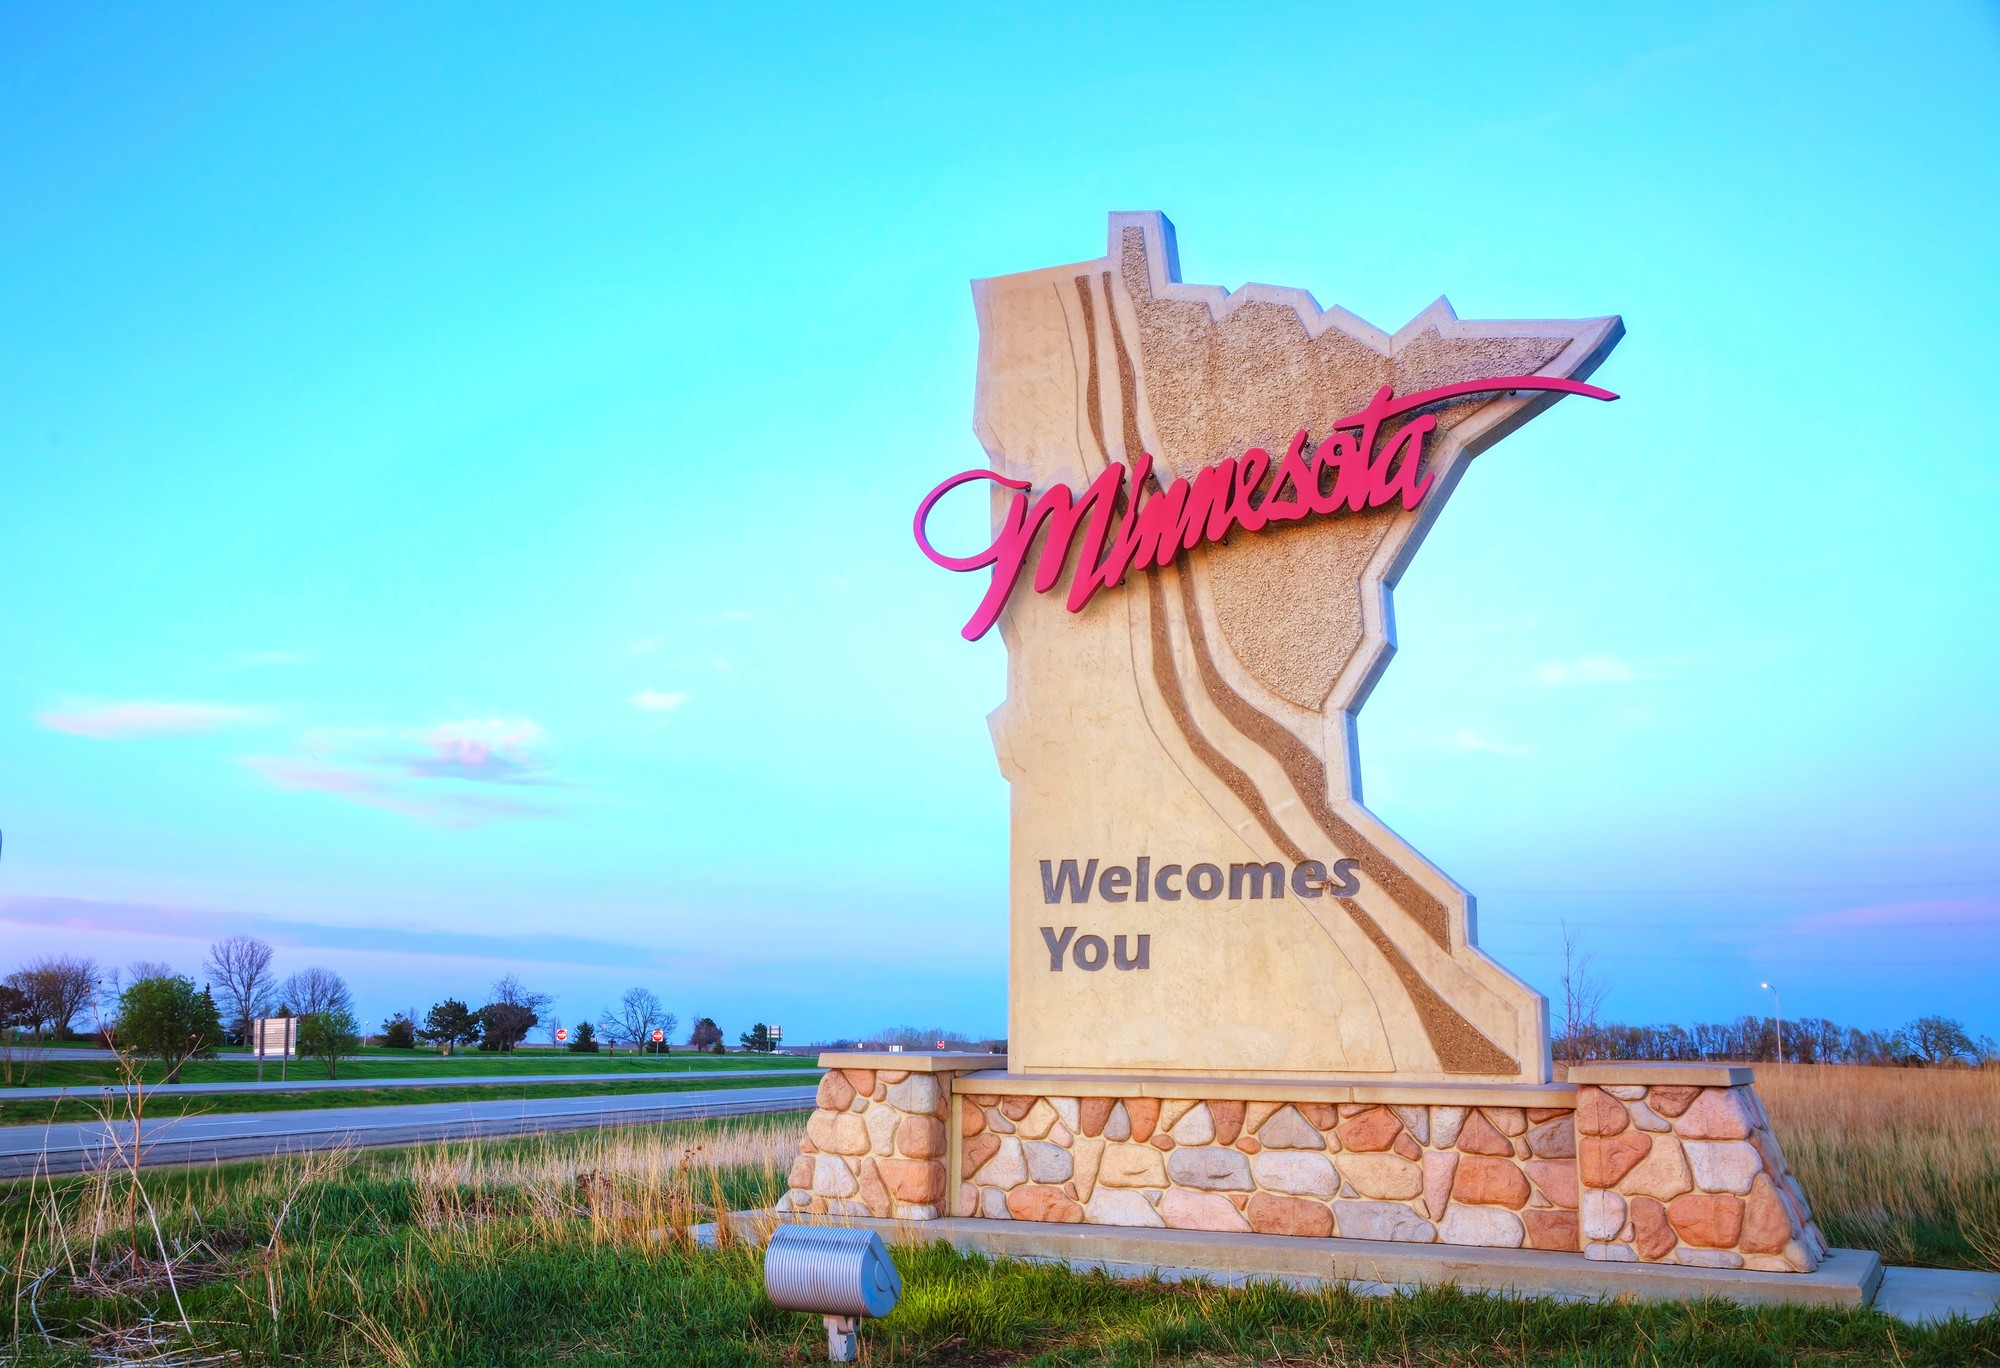 Minnesota sign